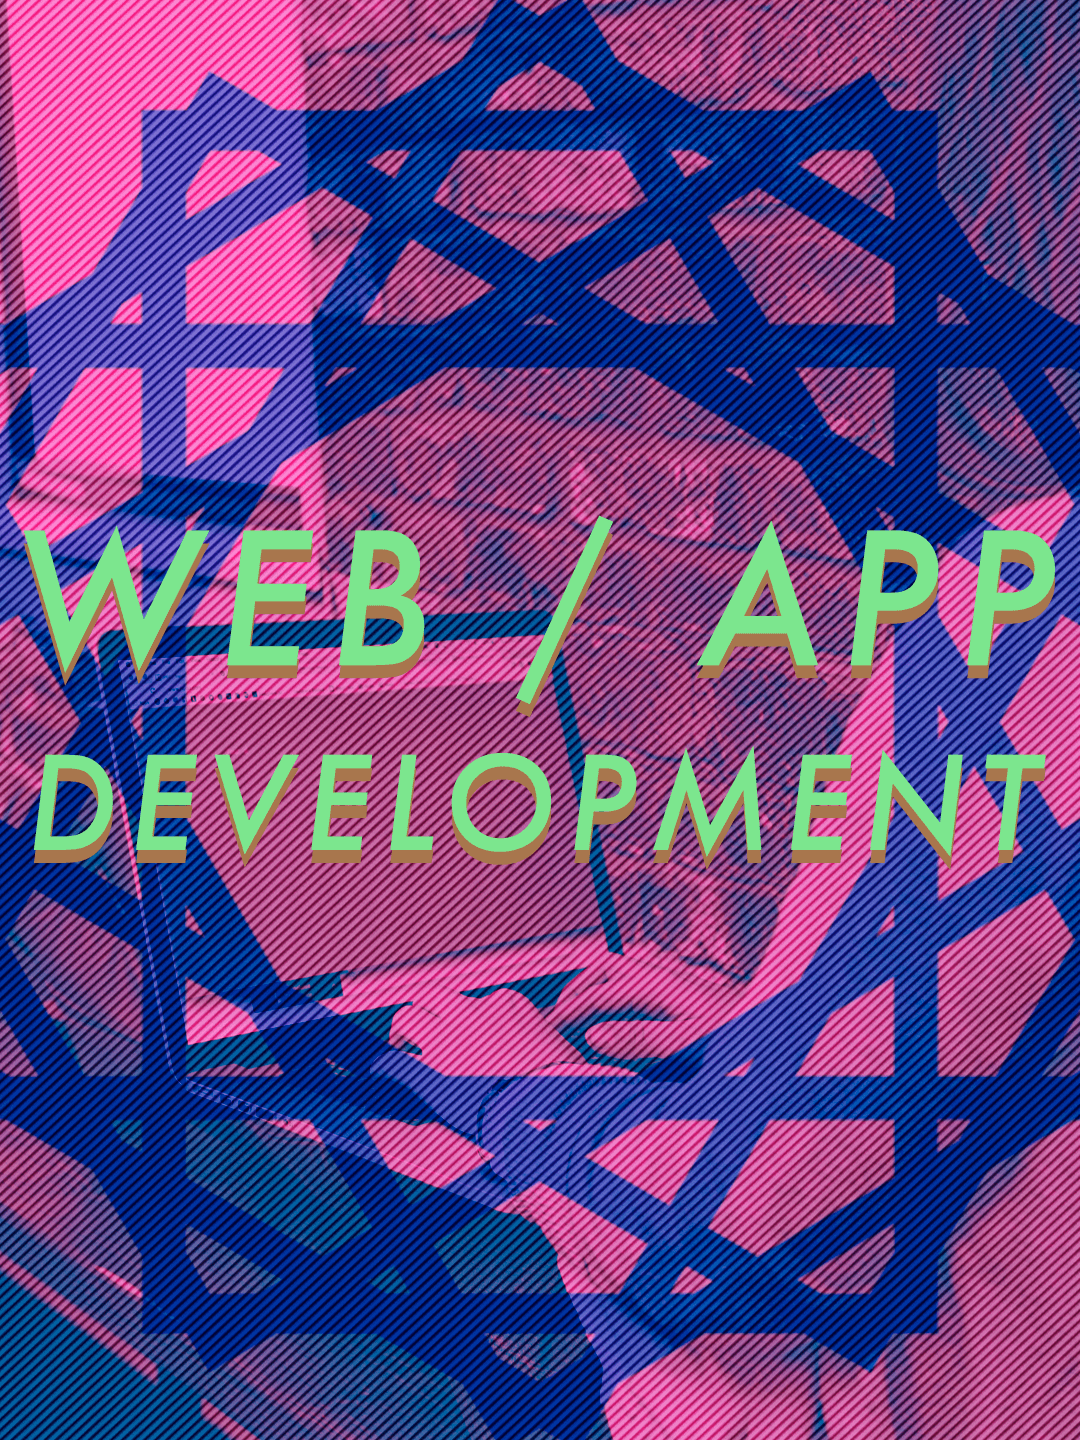 creative-services-shingle-web-development.png